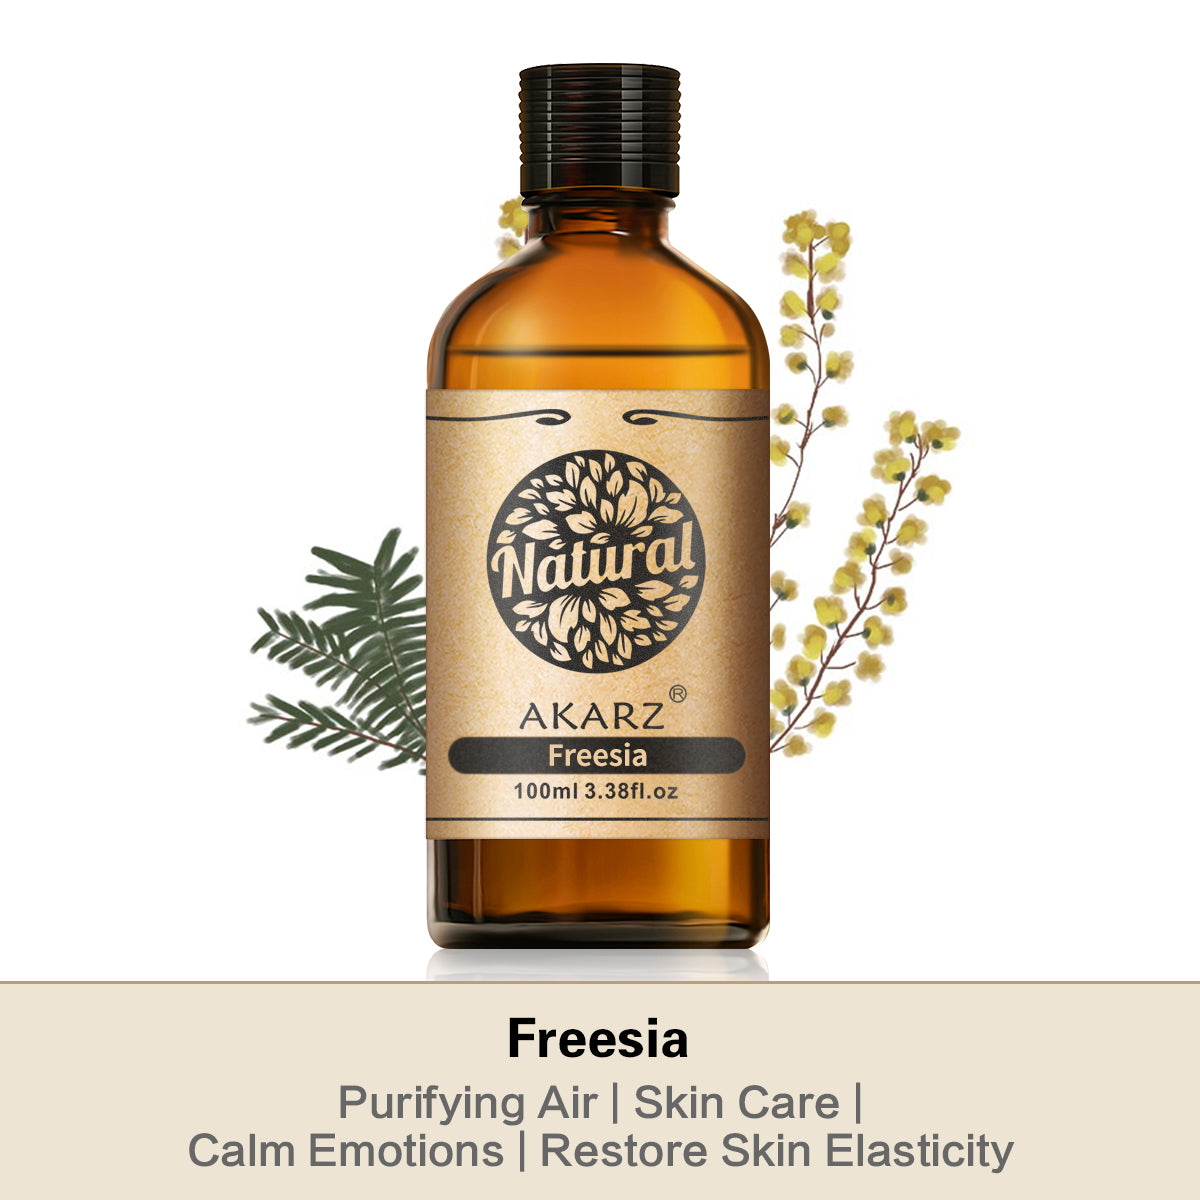 10ml Freesia essential oil fresh water-soluble essential oil